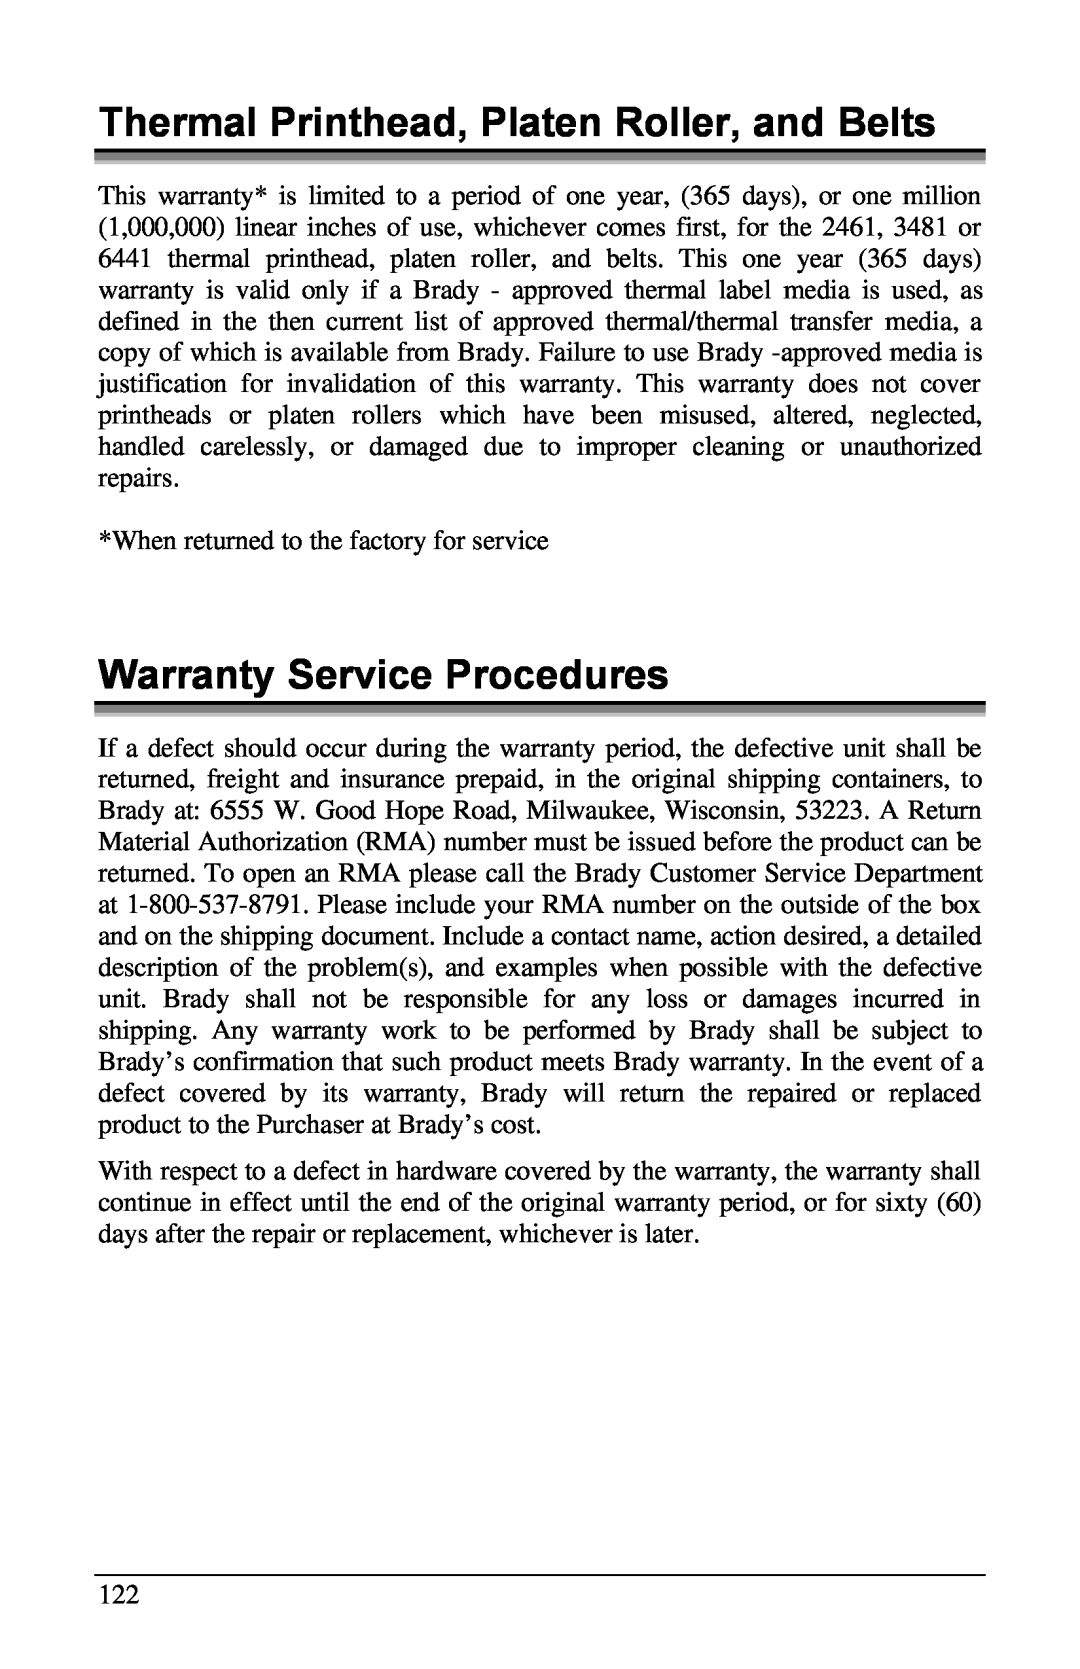 Brady 3481, 6441, 2461 manual Thermal Printhead, Platen Roller, and Belts, Warranty Service Procedures 